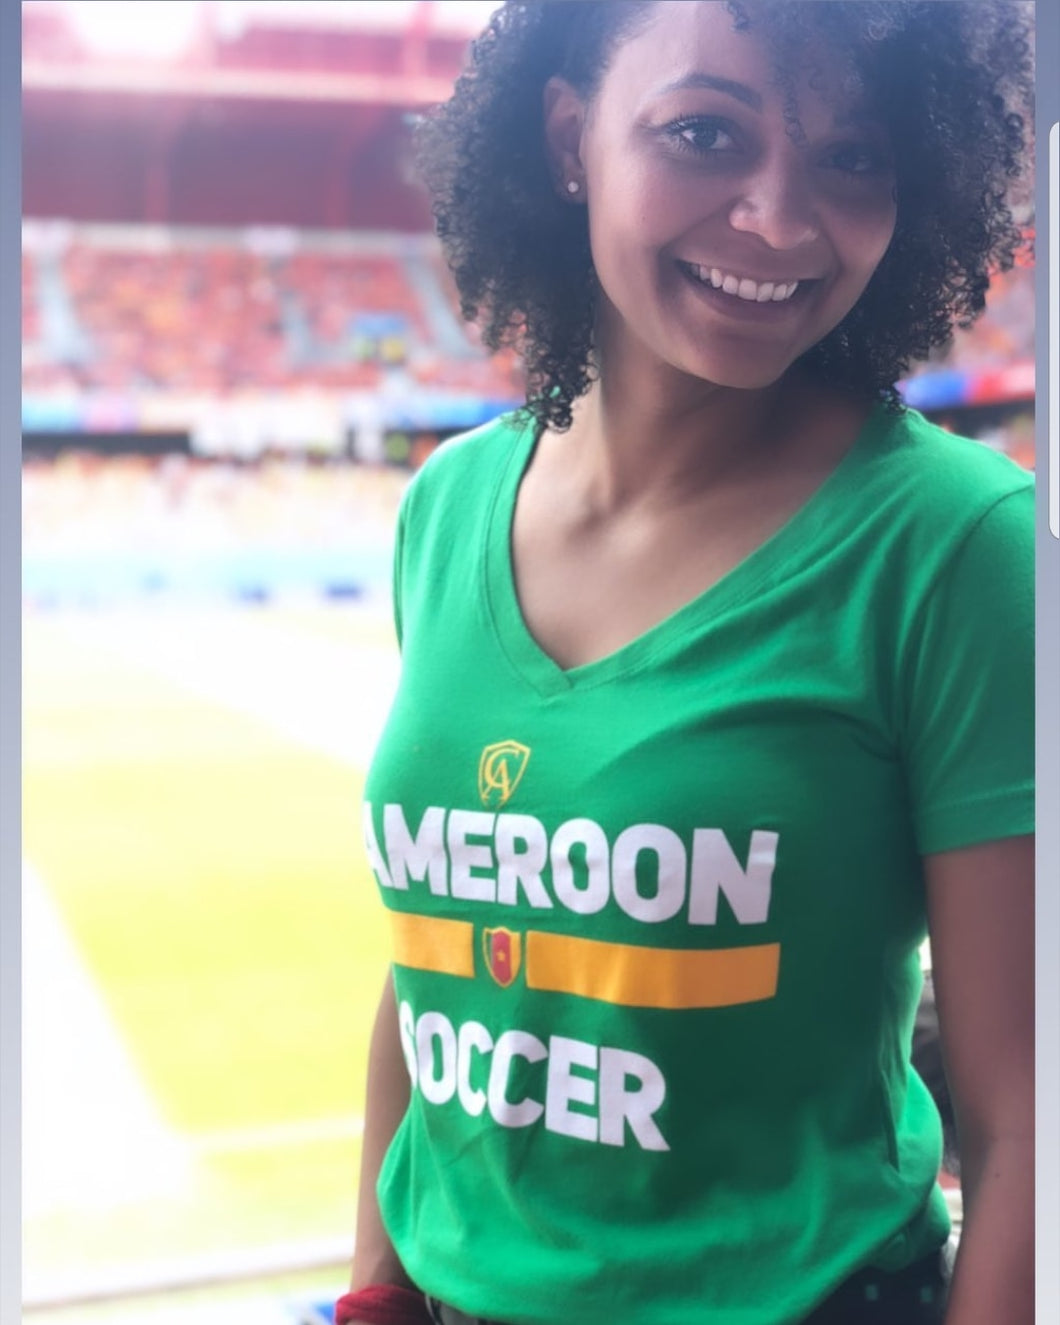 Cameroon Soccer Tee